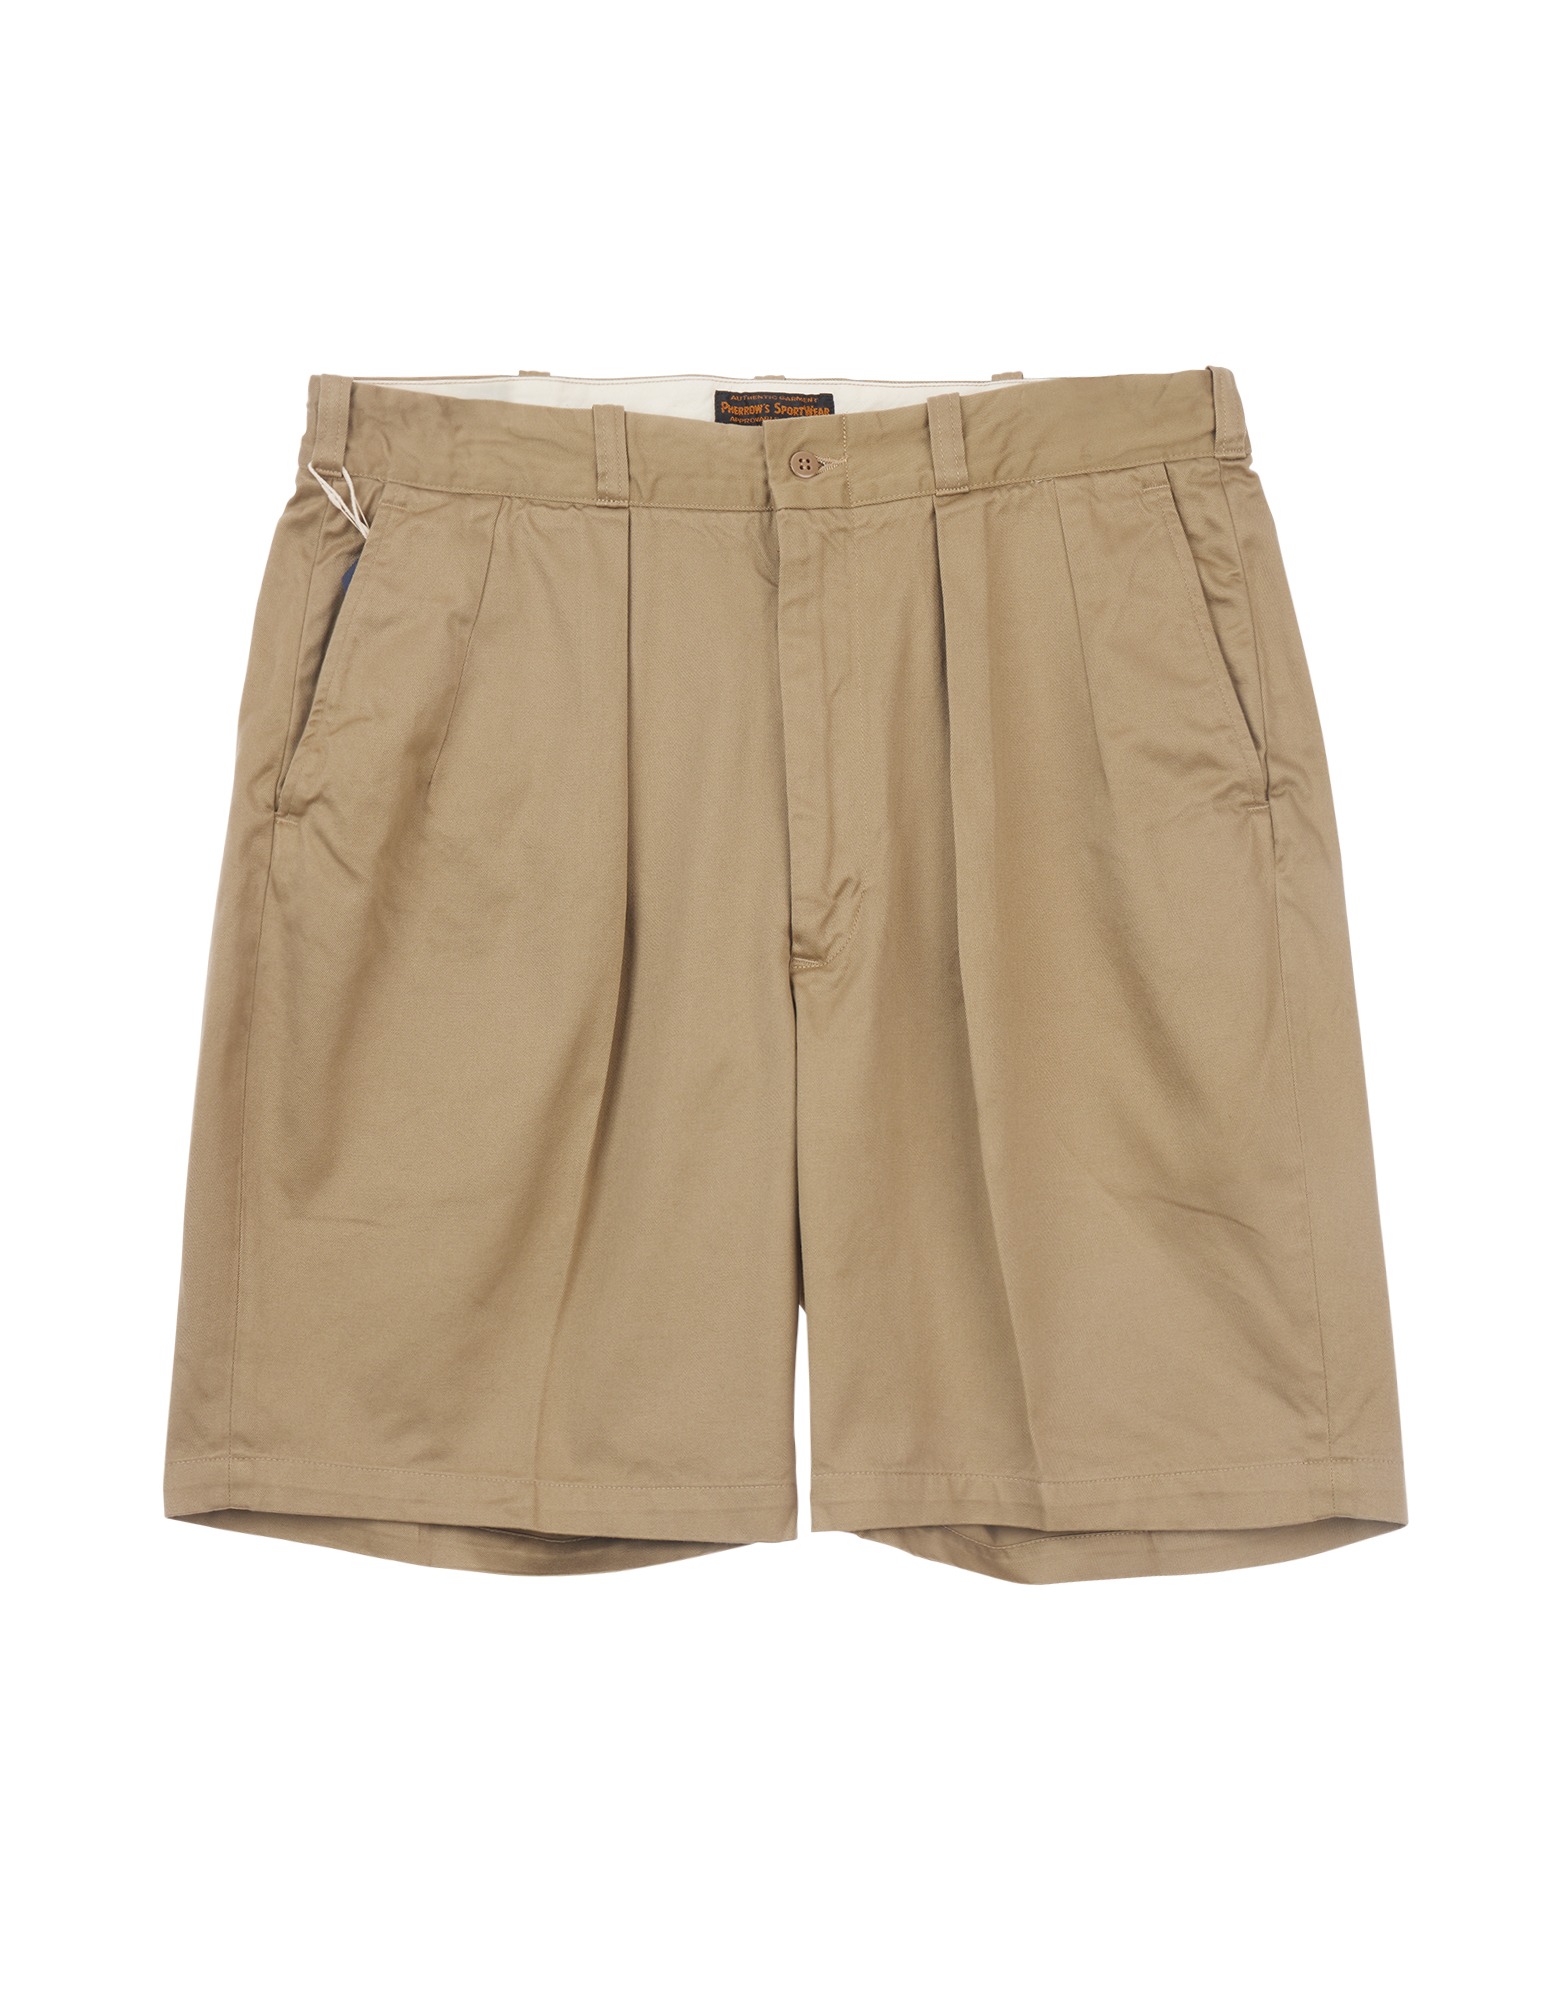 U.S Army Chino Shorts (Beige)